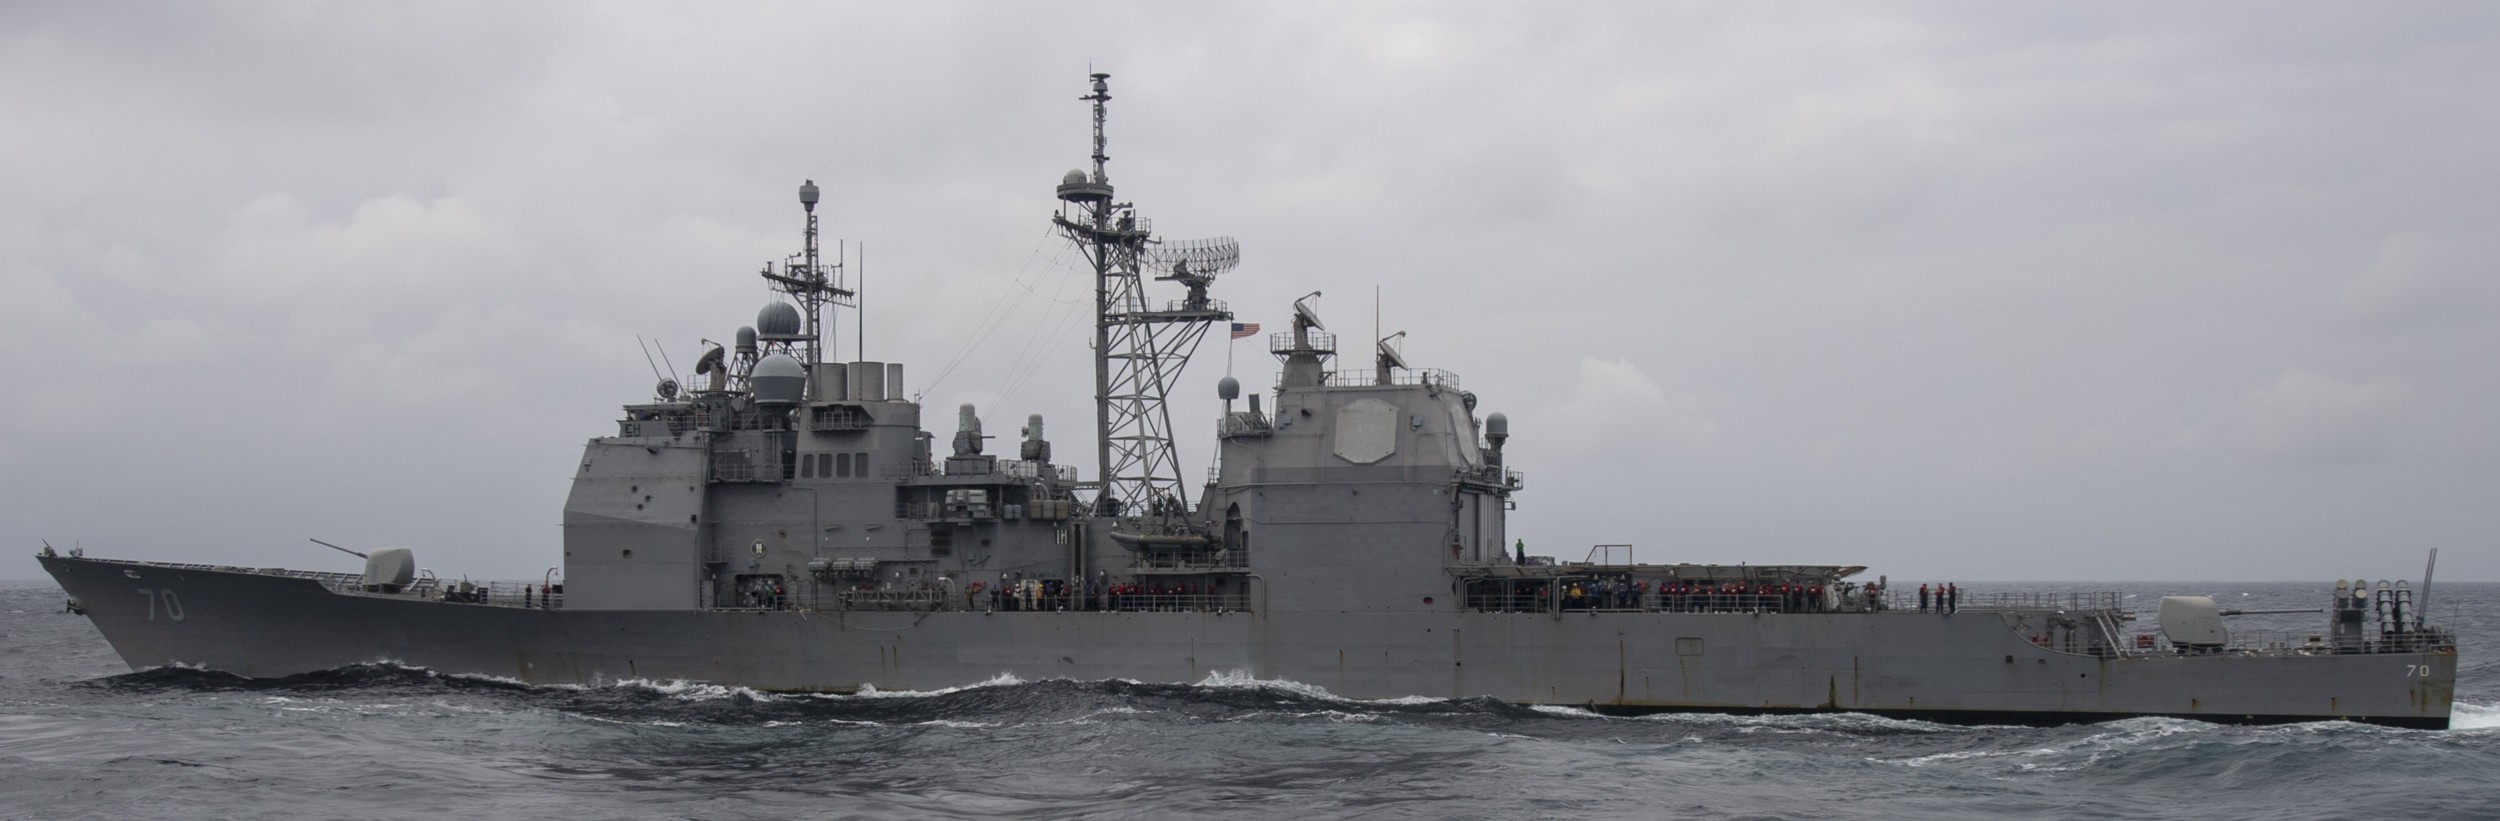 cg-70 uss lake erie ticonderoga class guided missile cruiser us navy east china sea 125